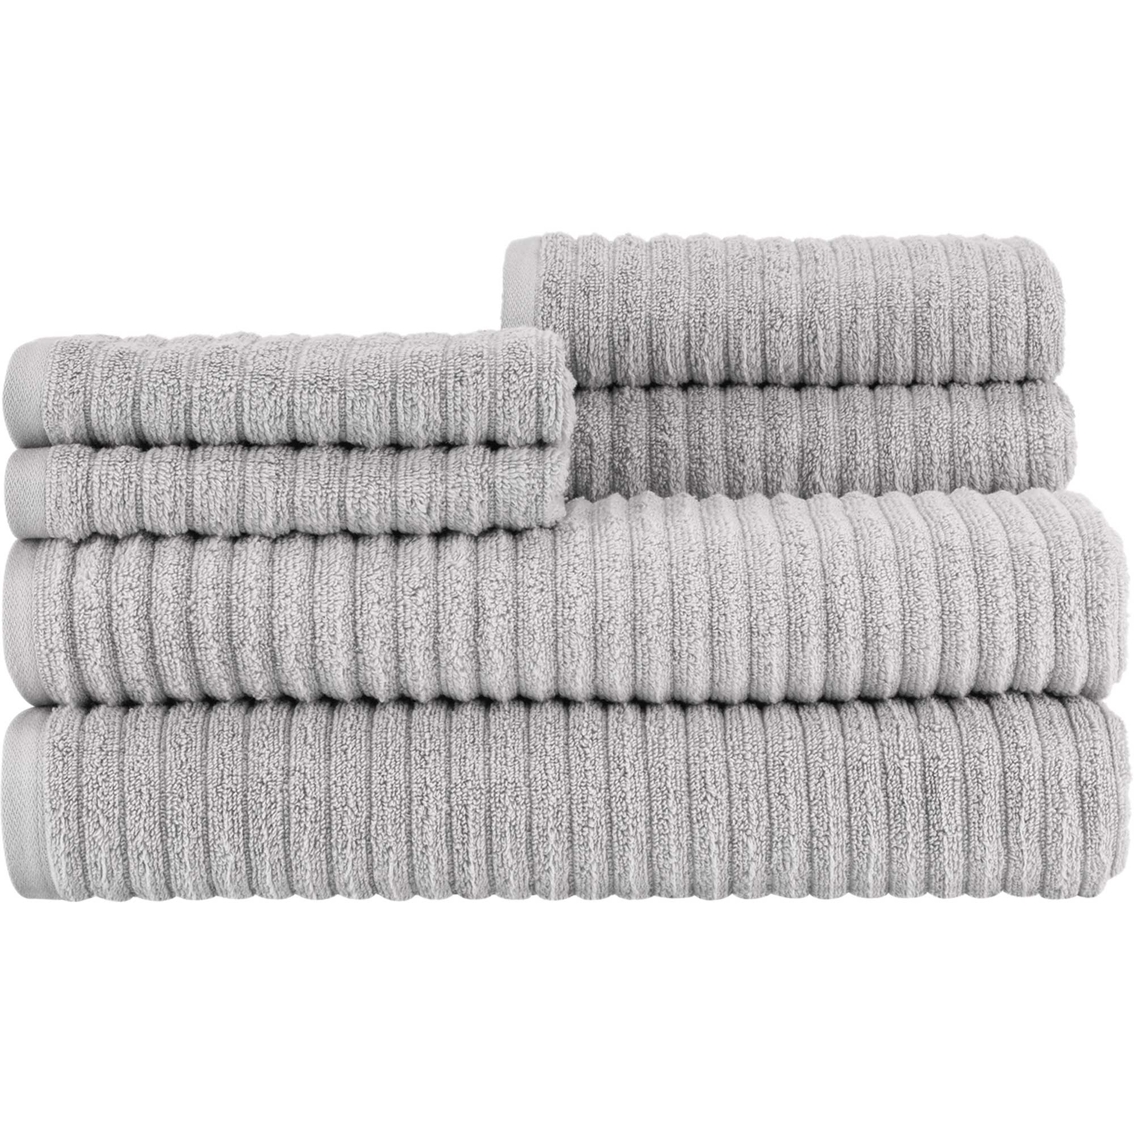 Caro Home Infinity Rib Grey Bath Towel, Bath Towels, Household